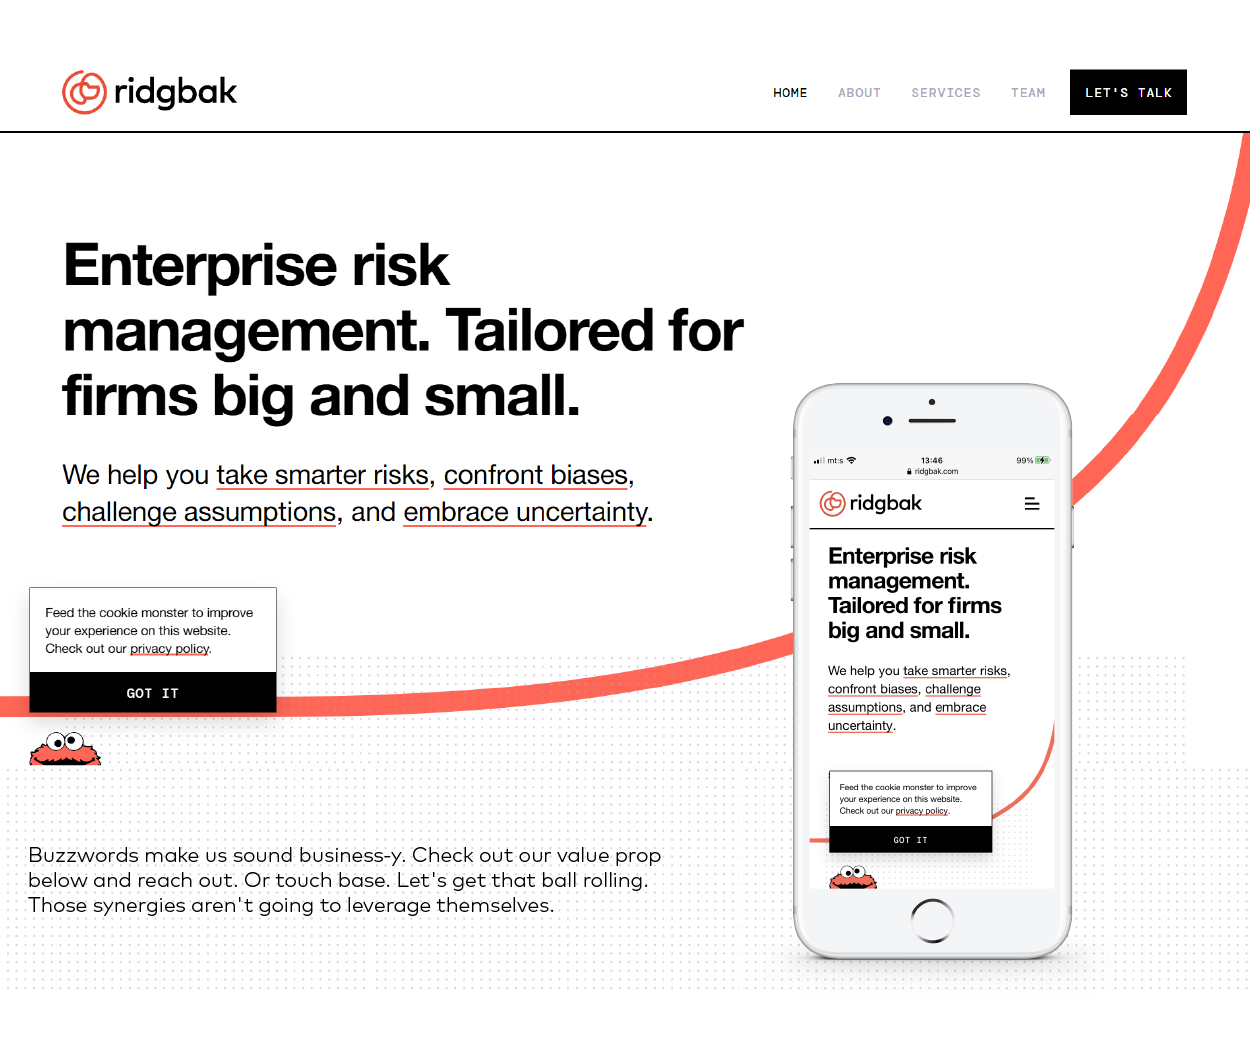 Ridgbak - enterprise risk management company Logo on Website Image